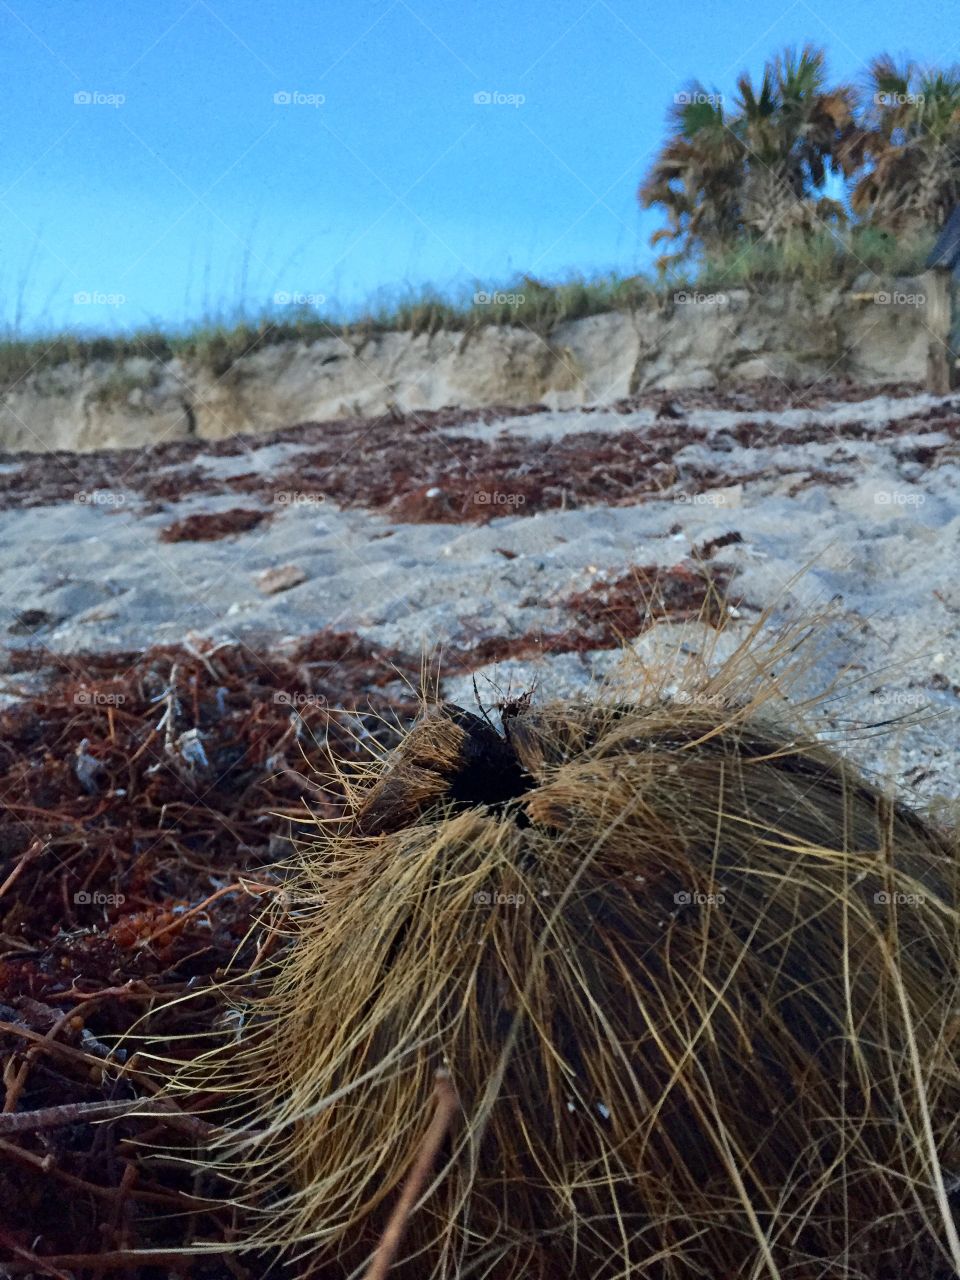 Coconut. Seaweed. Texture. Fuzzy. Hairy. Beach. Erosion. Beach. Dunes. 